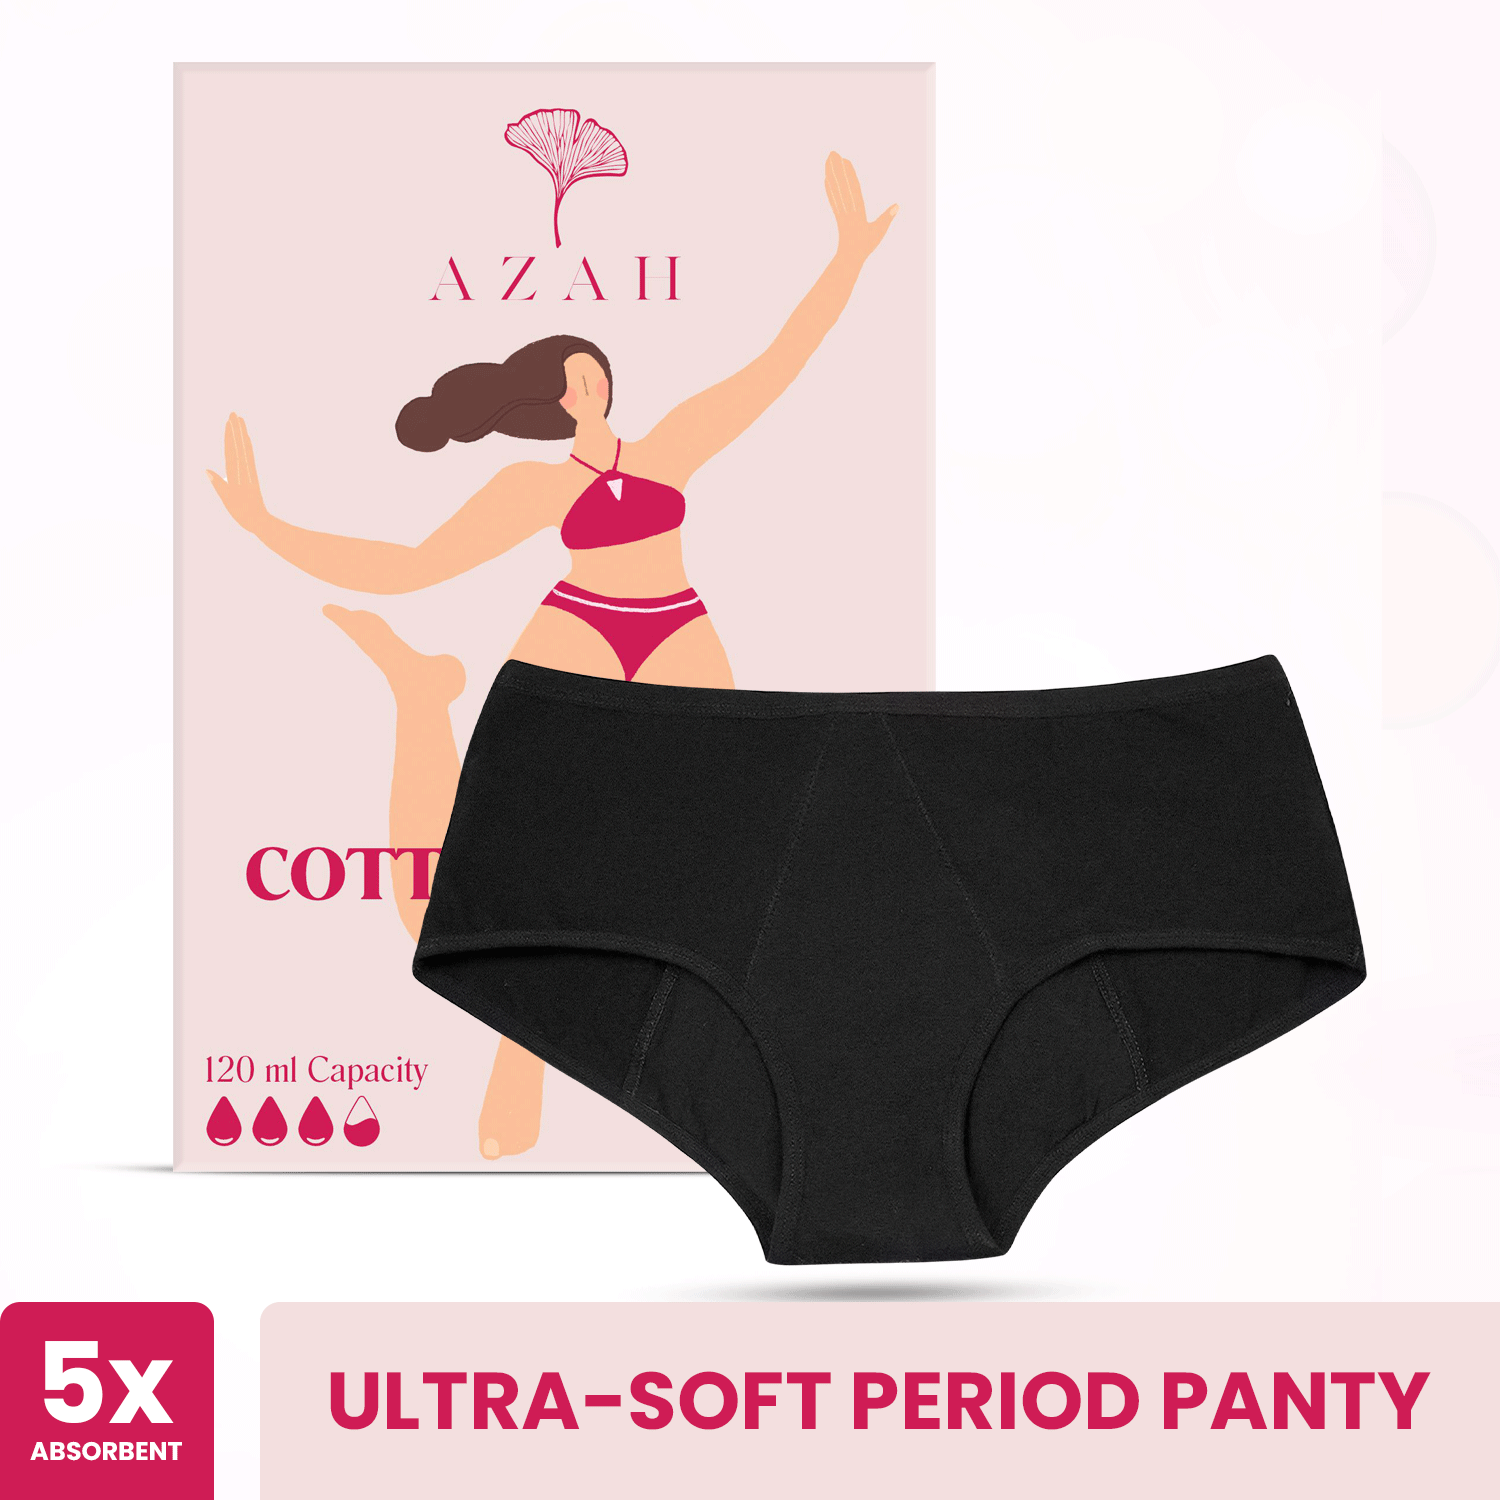 Azah Period Panty for Women - Cotton Reusable Period Underwear